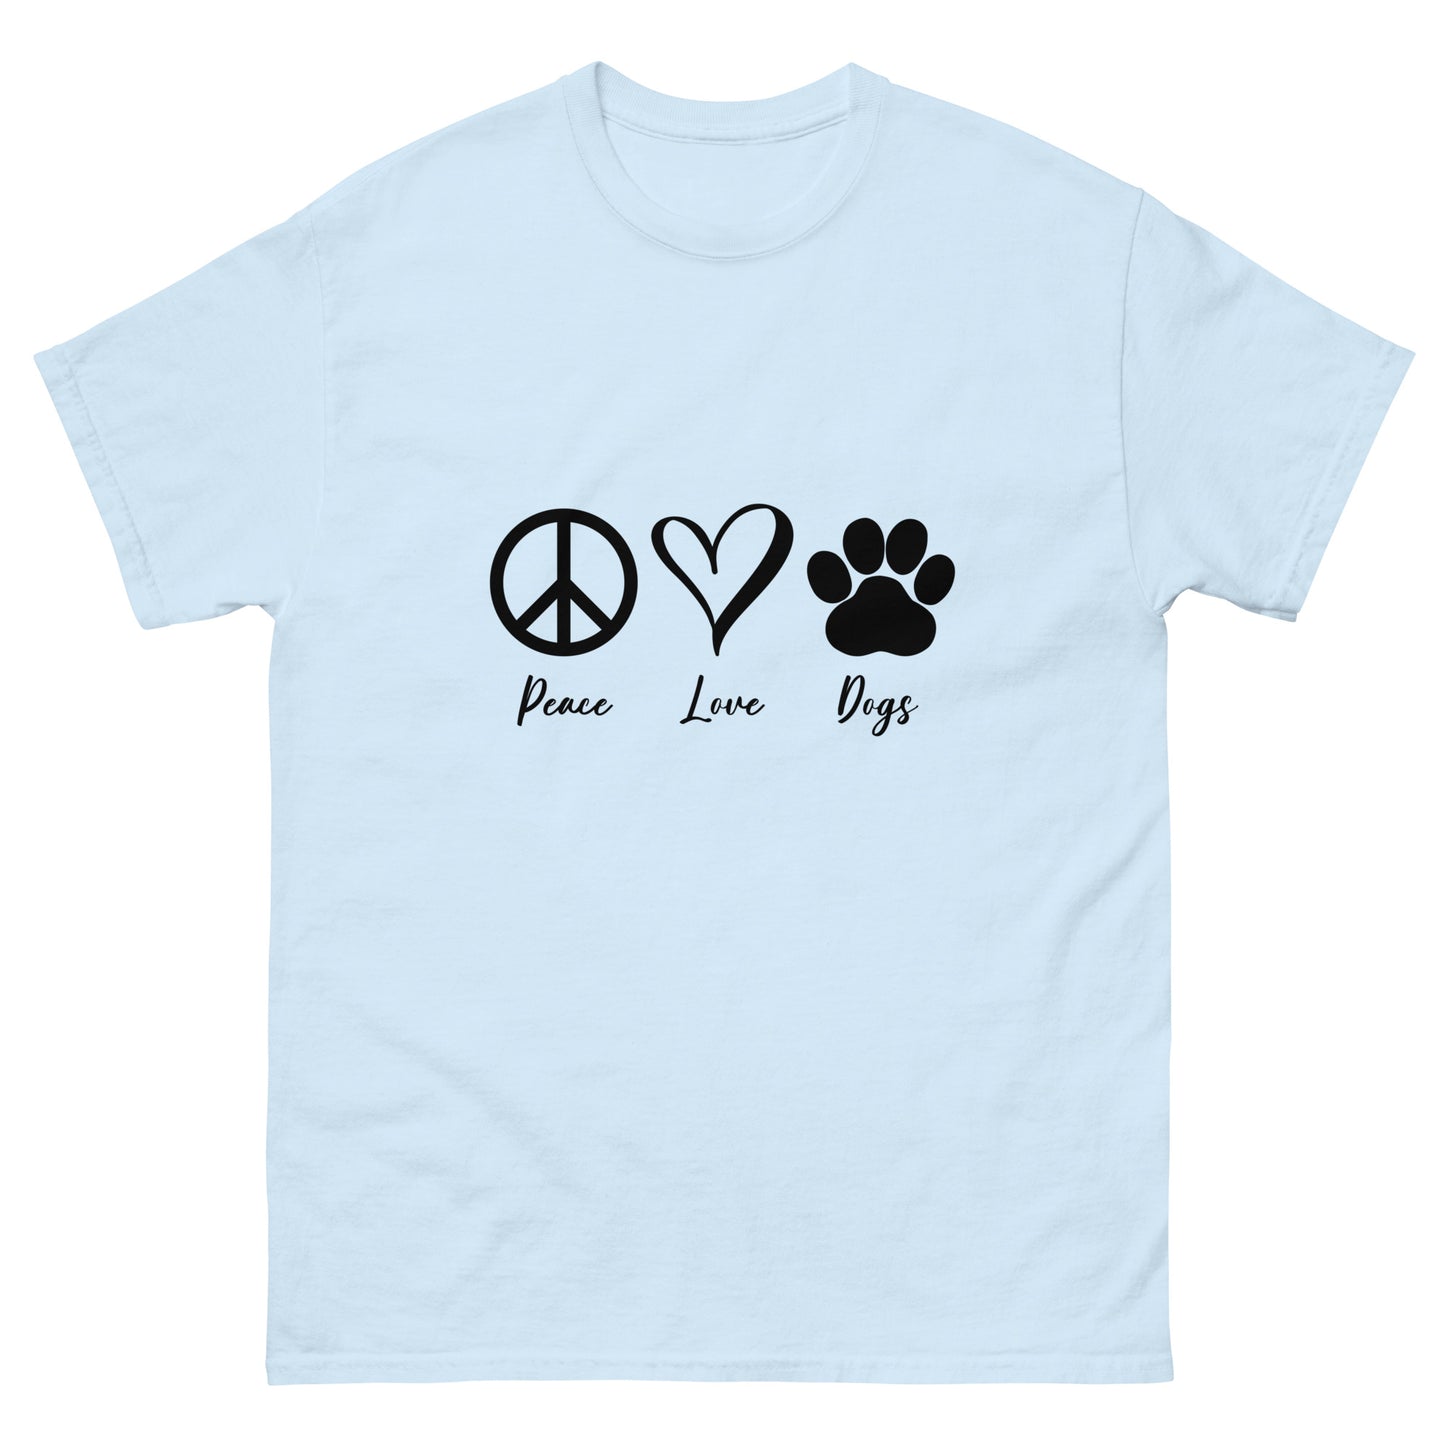 Peace Love Dogs - classic tee